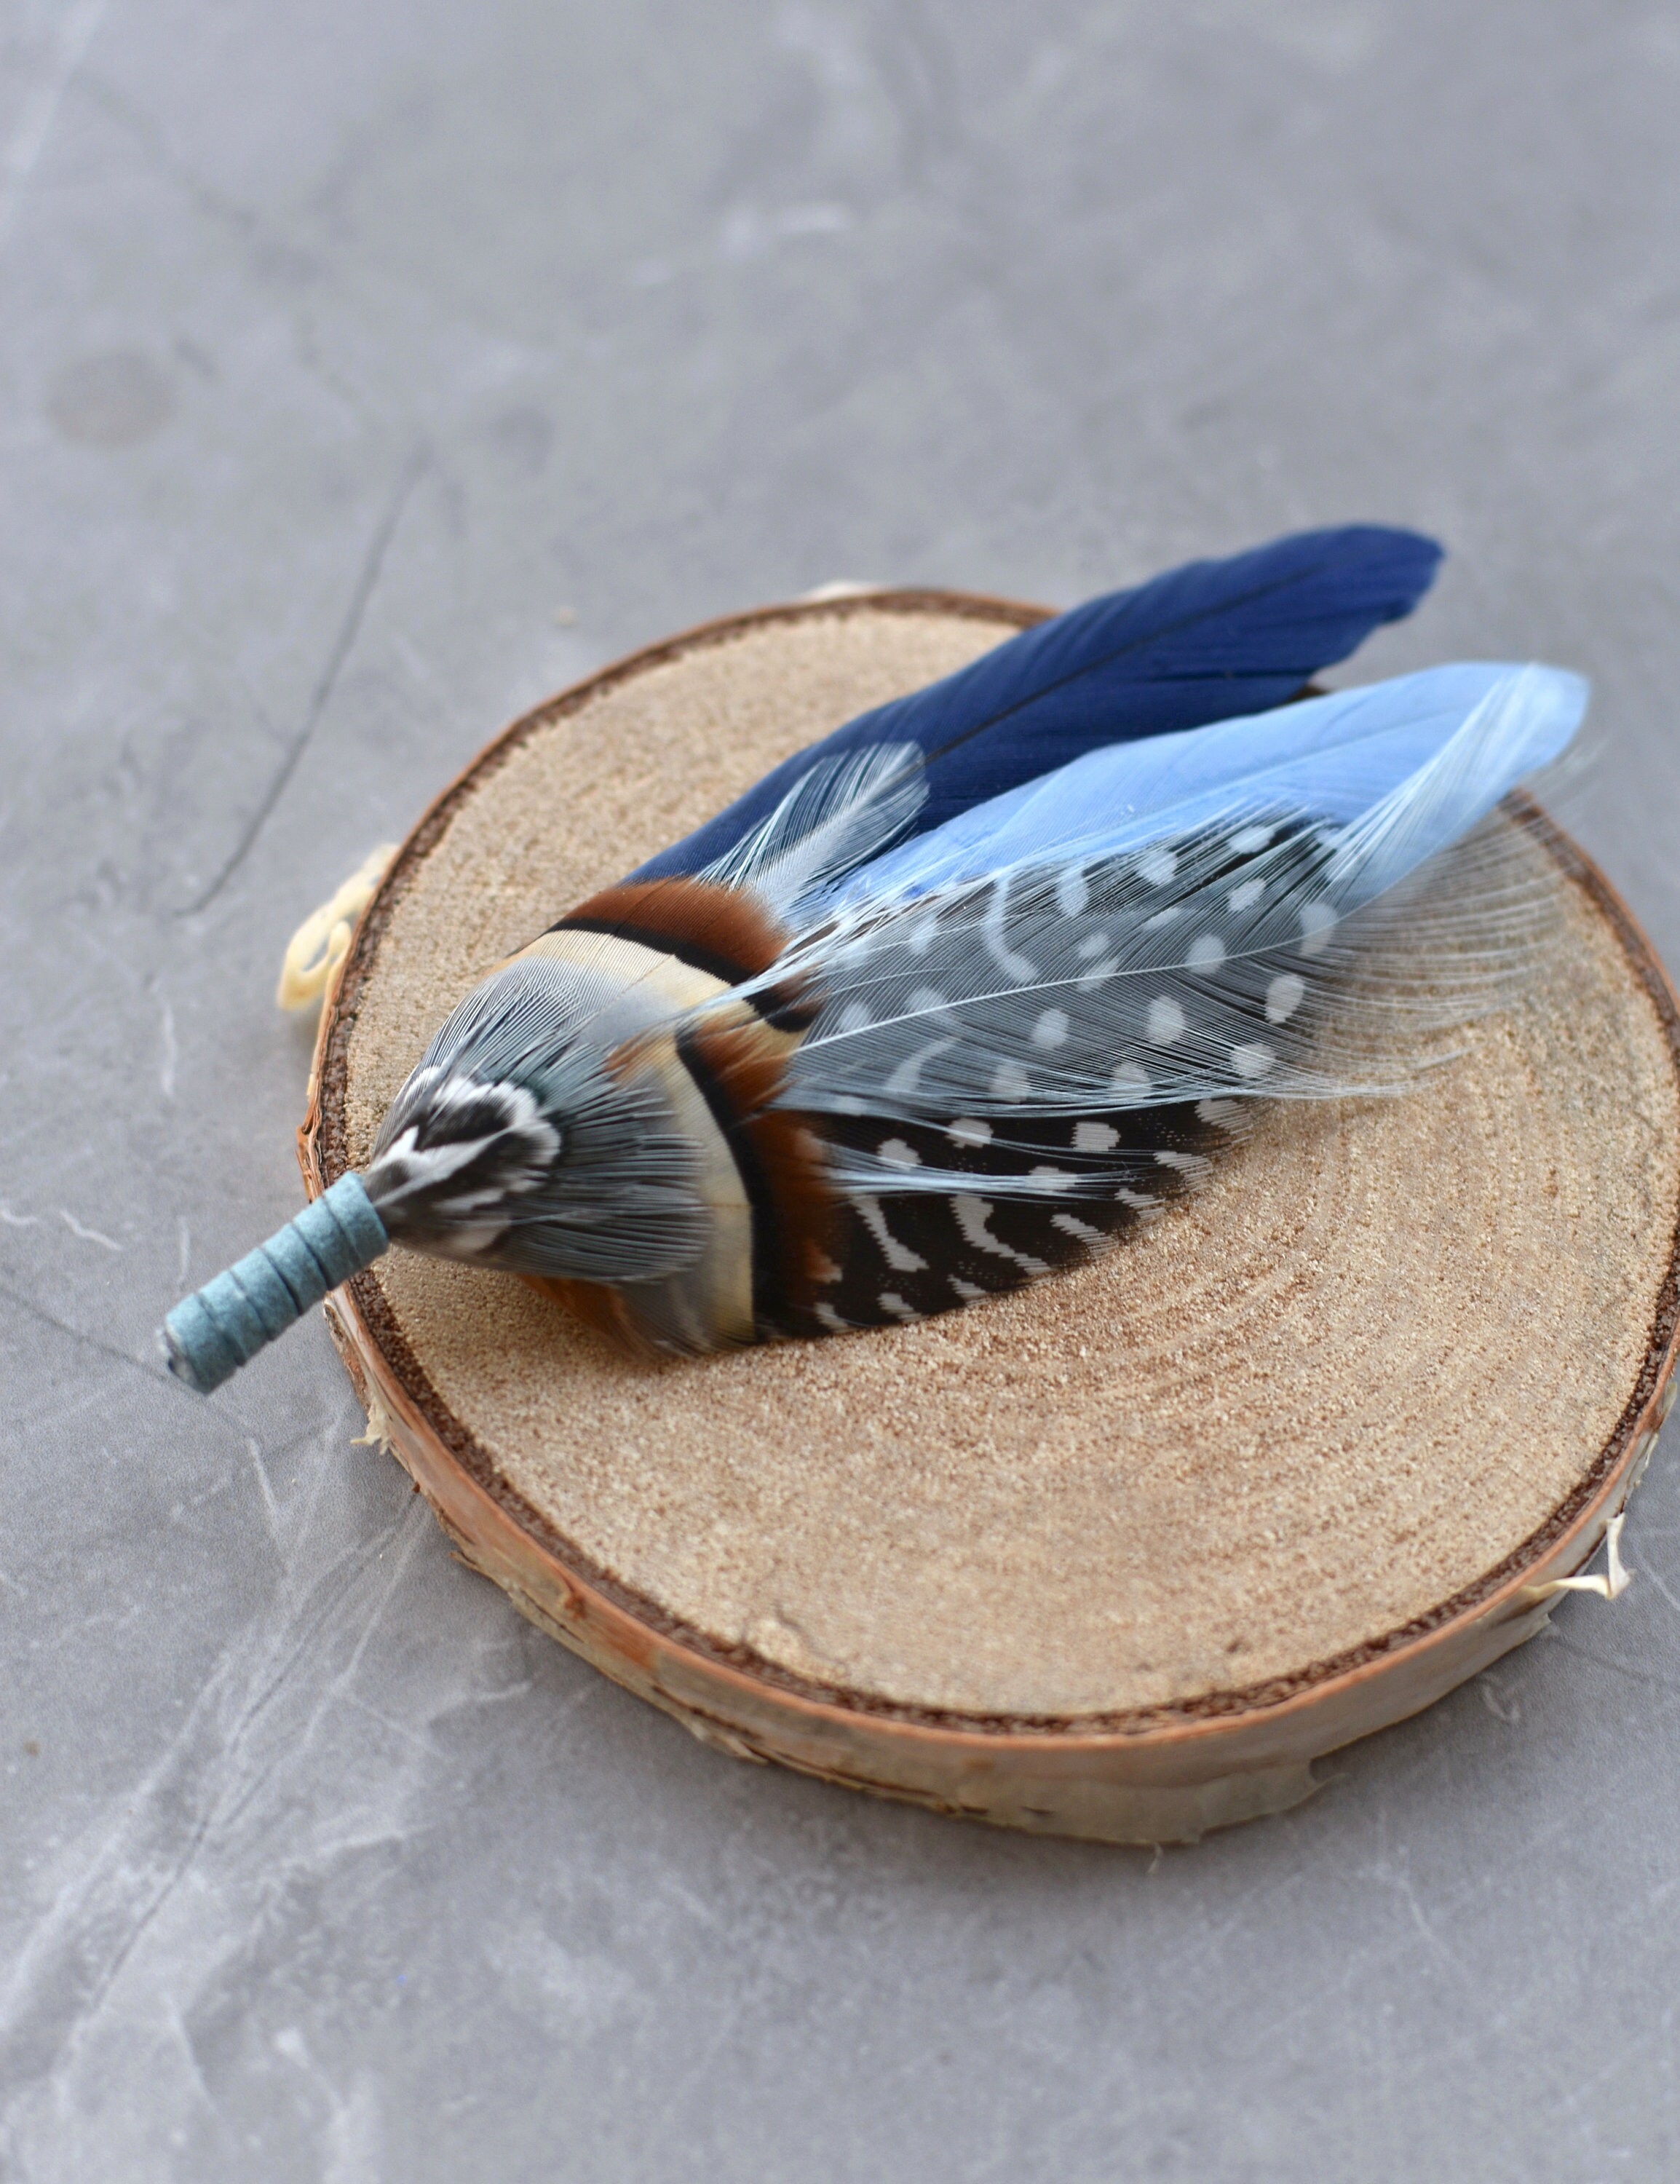 Blue Feather PinPal Pin Holder Magnetic Aqua